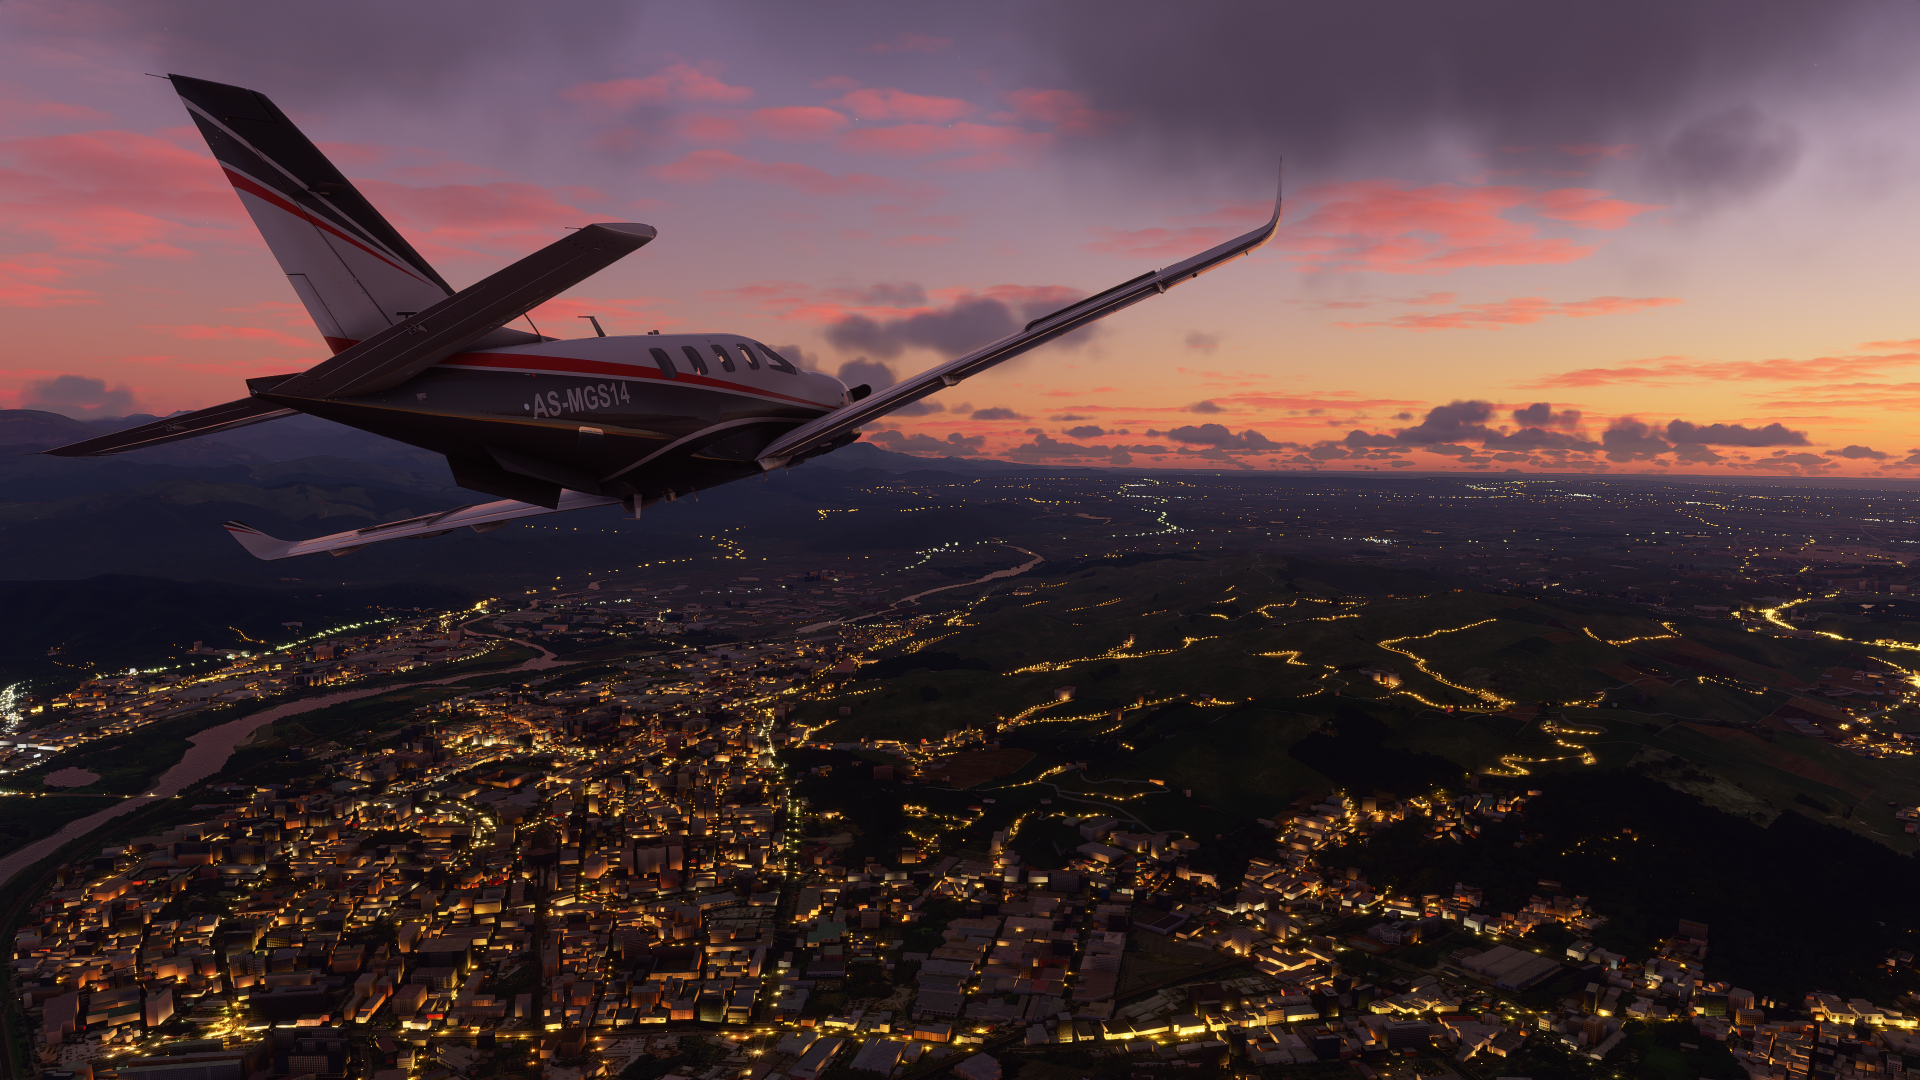 Microsoft Flight Simulator Celebrates Franchise's 40th Anniversary